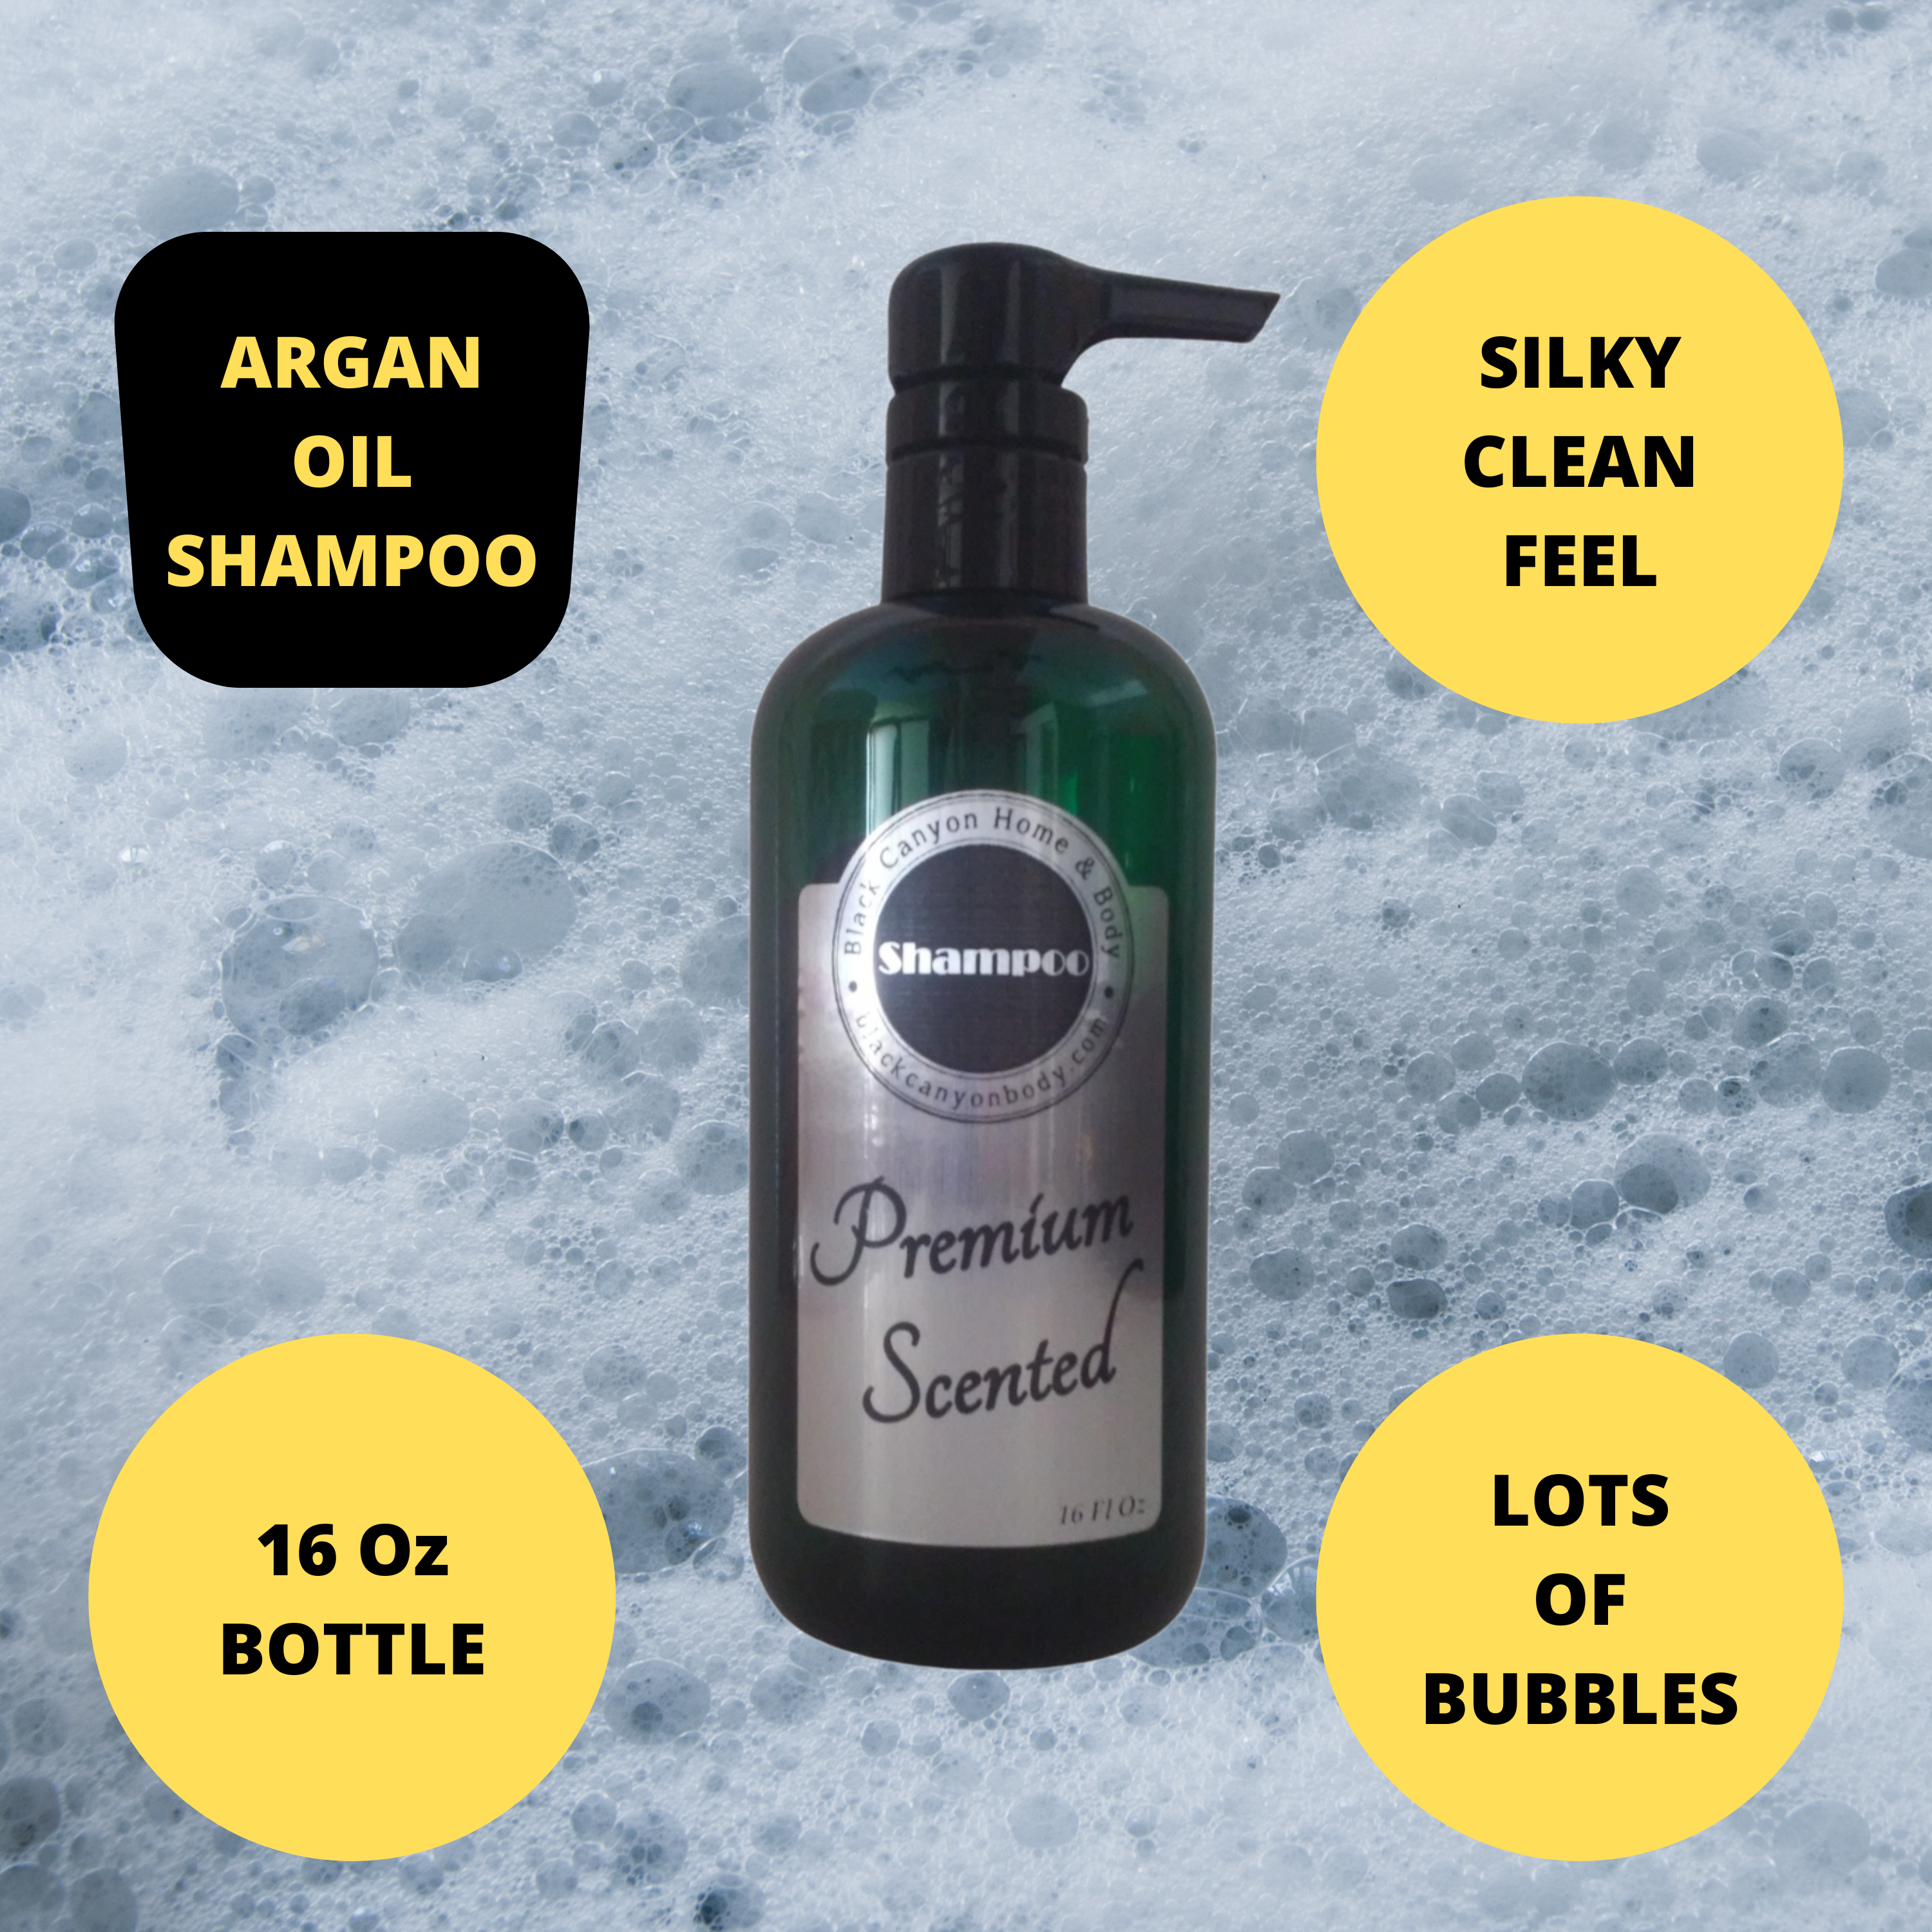 Black Canyon Lemon Freesia Scented Shampoo with Argan Oil